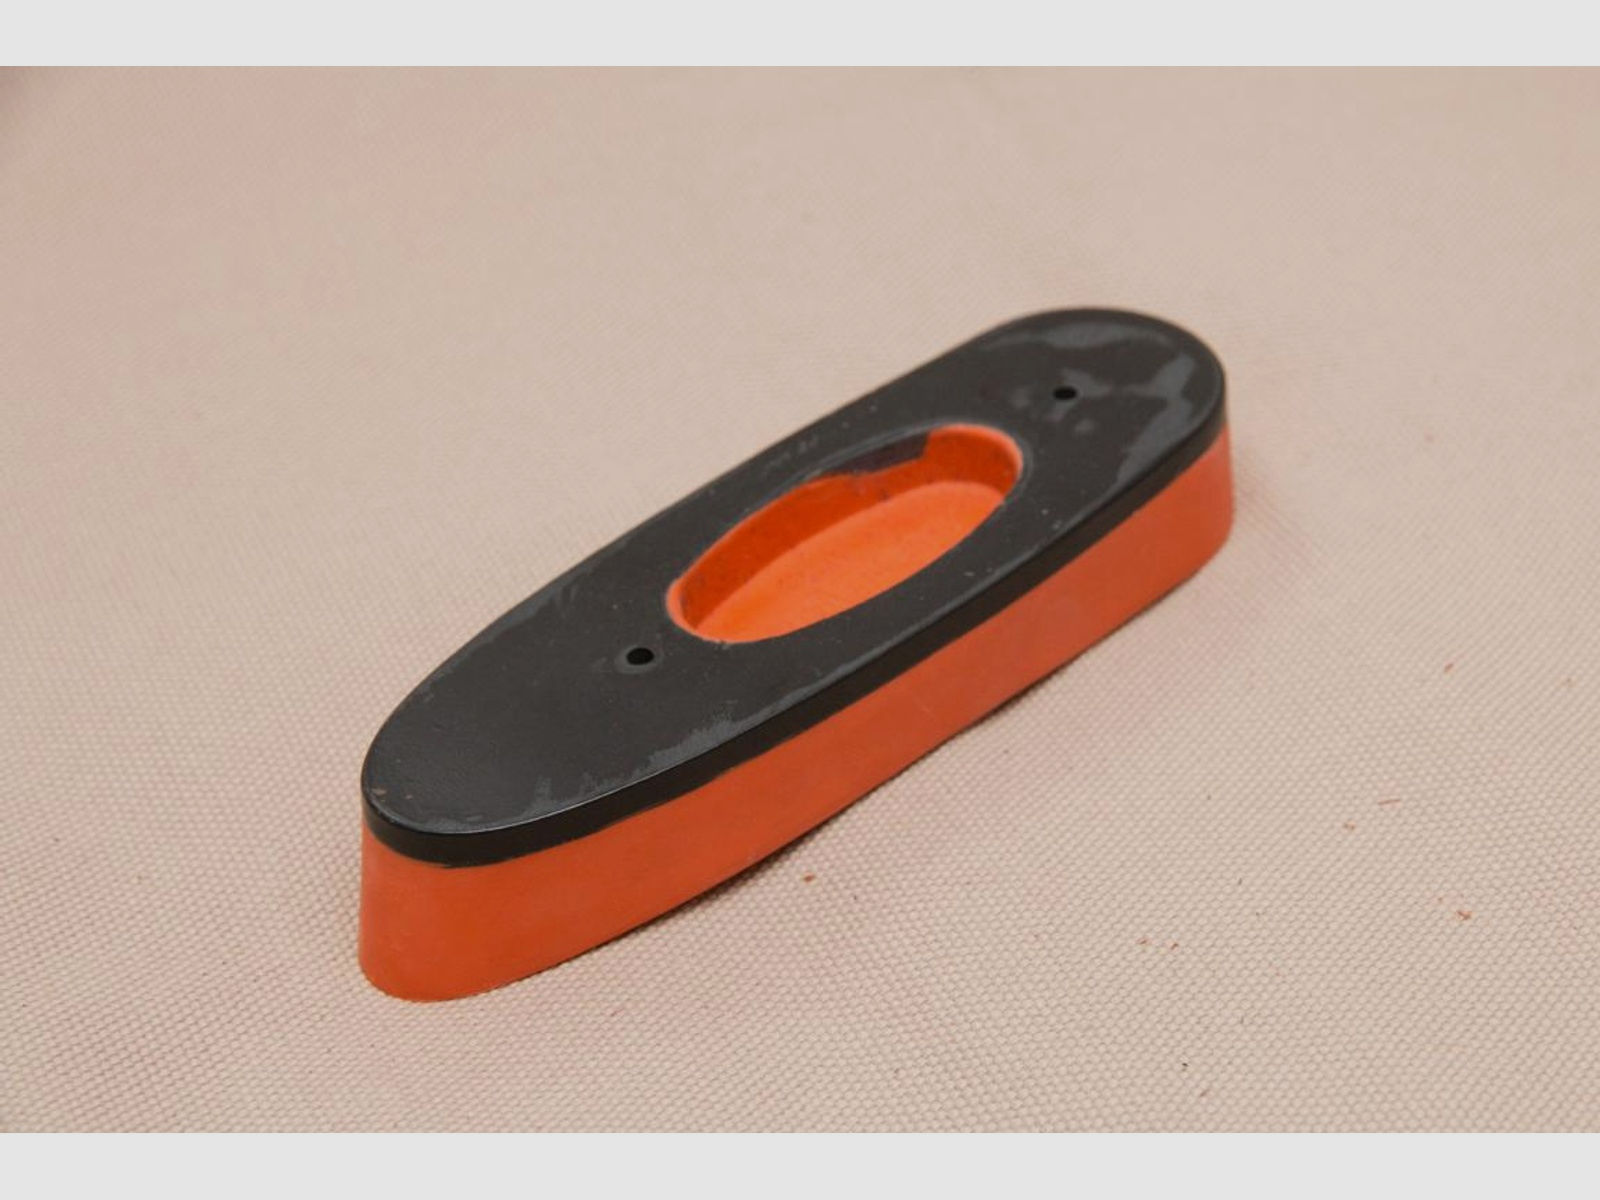 S.W. Silver Schaftkappe London rot - das Origial -  classic rubber recoil pad, Safari Gummischaftkappe No. 3